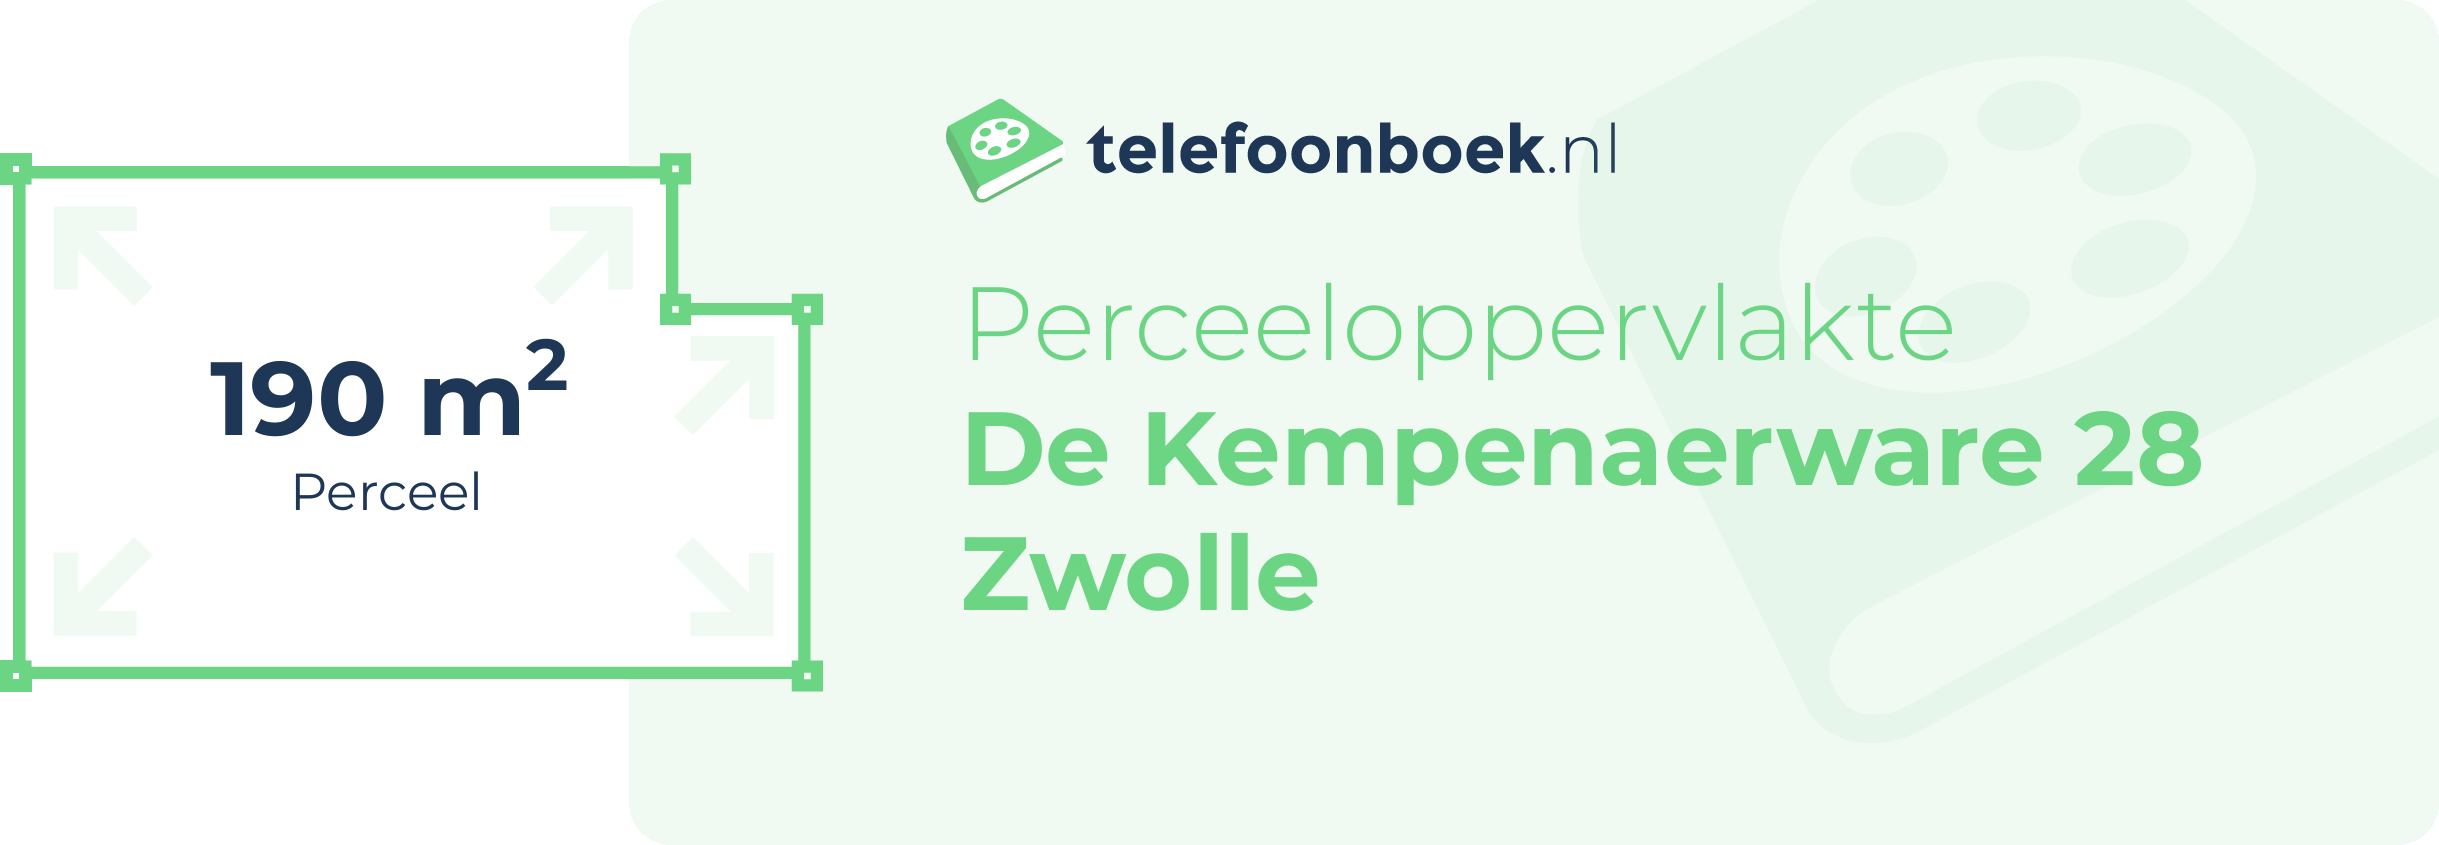 Perceeloppervlakte De Kempenaerware 28 Zwolle